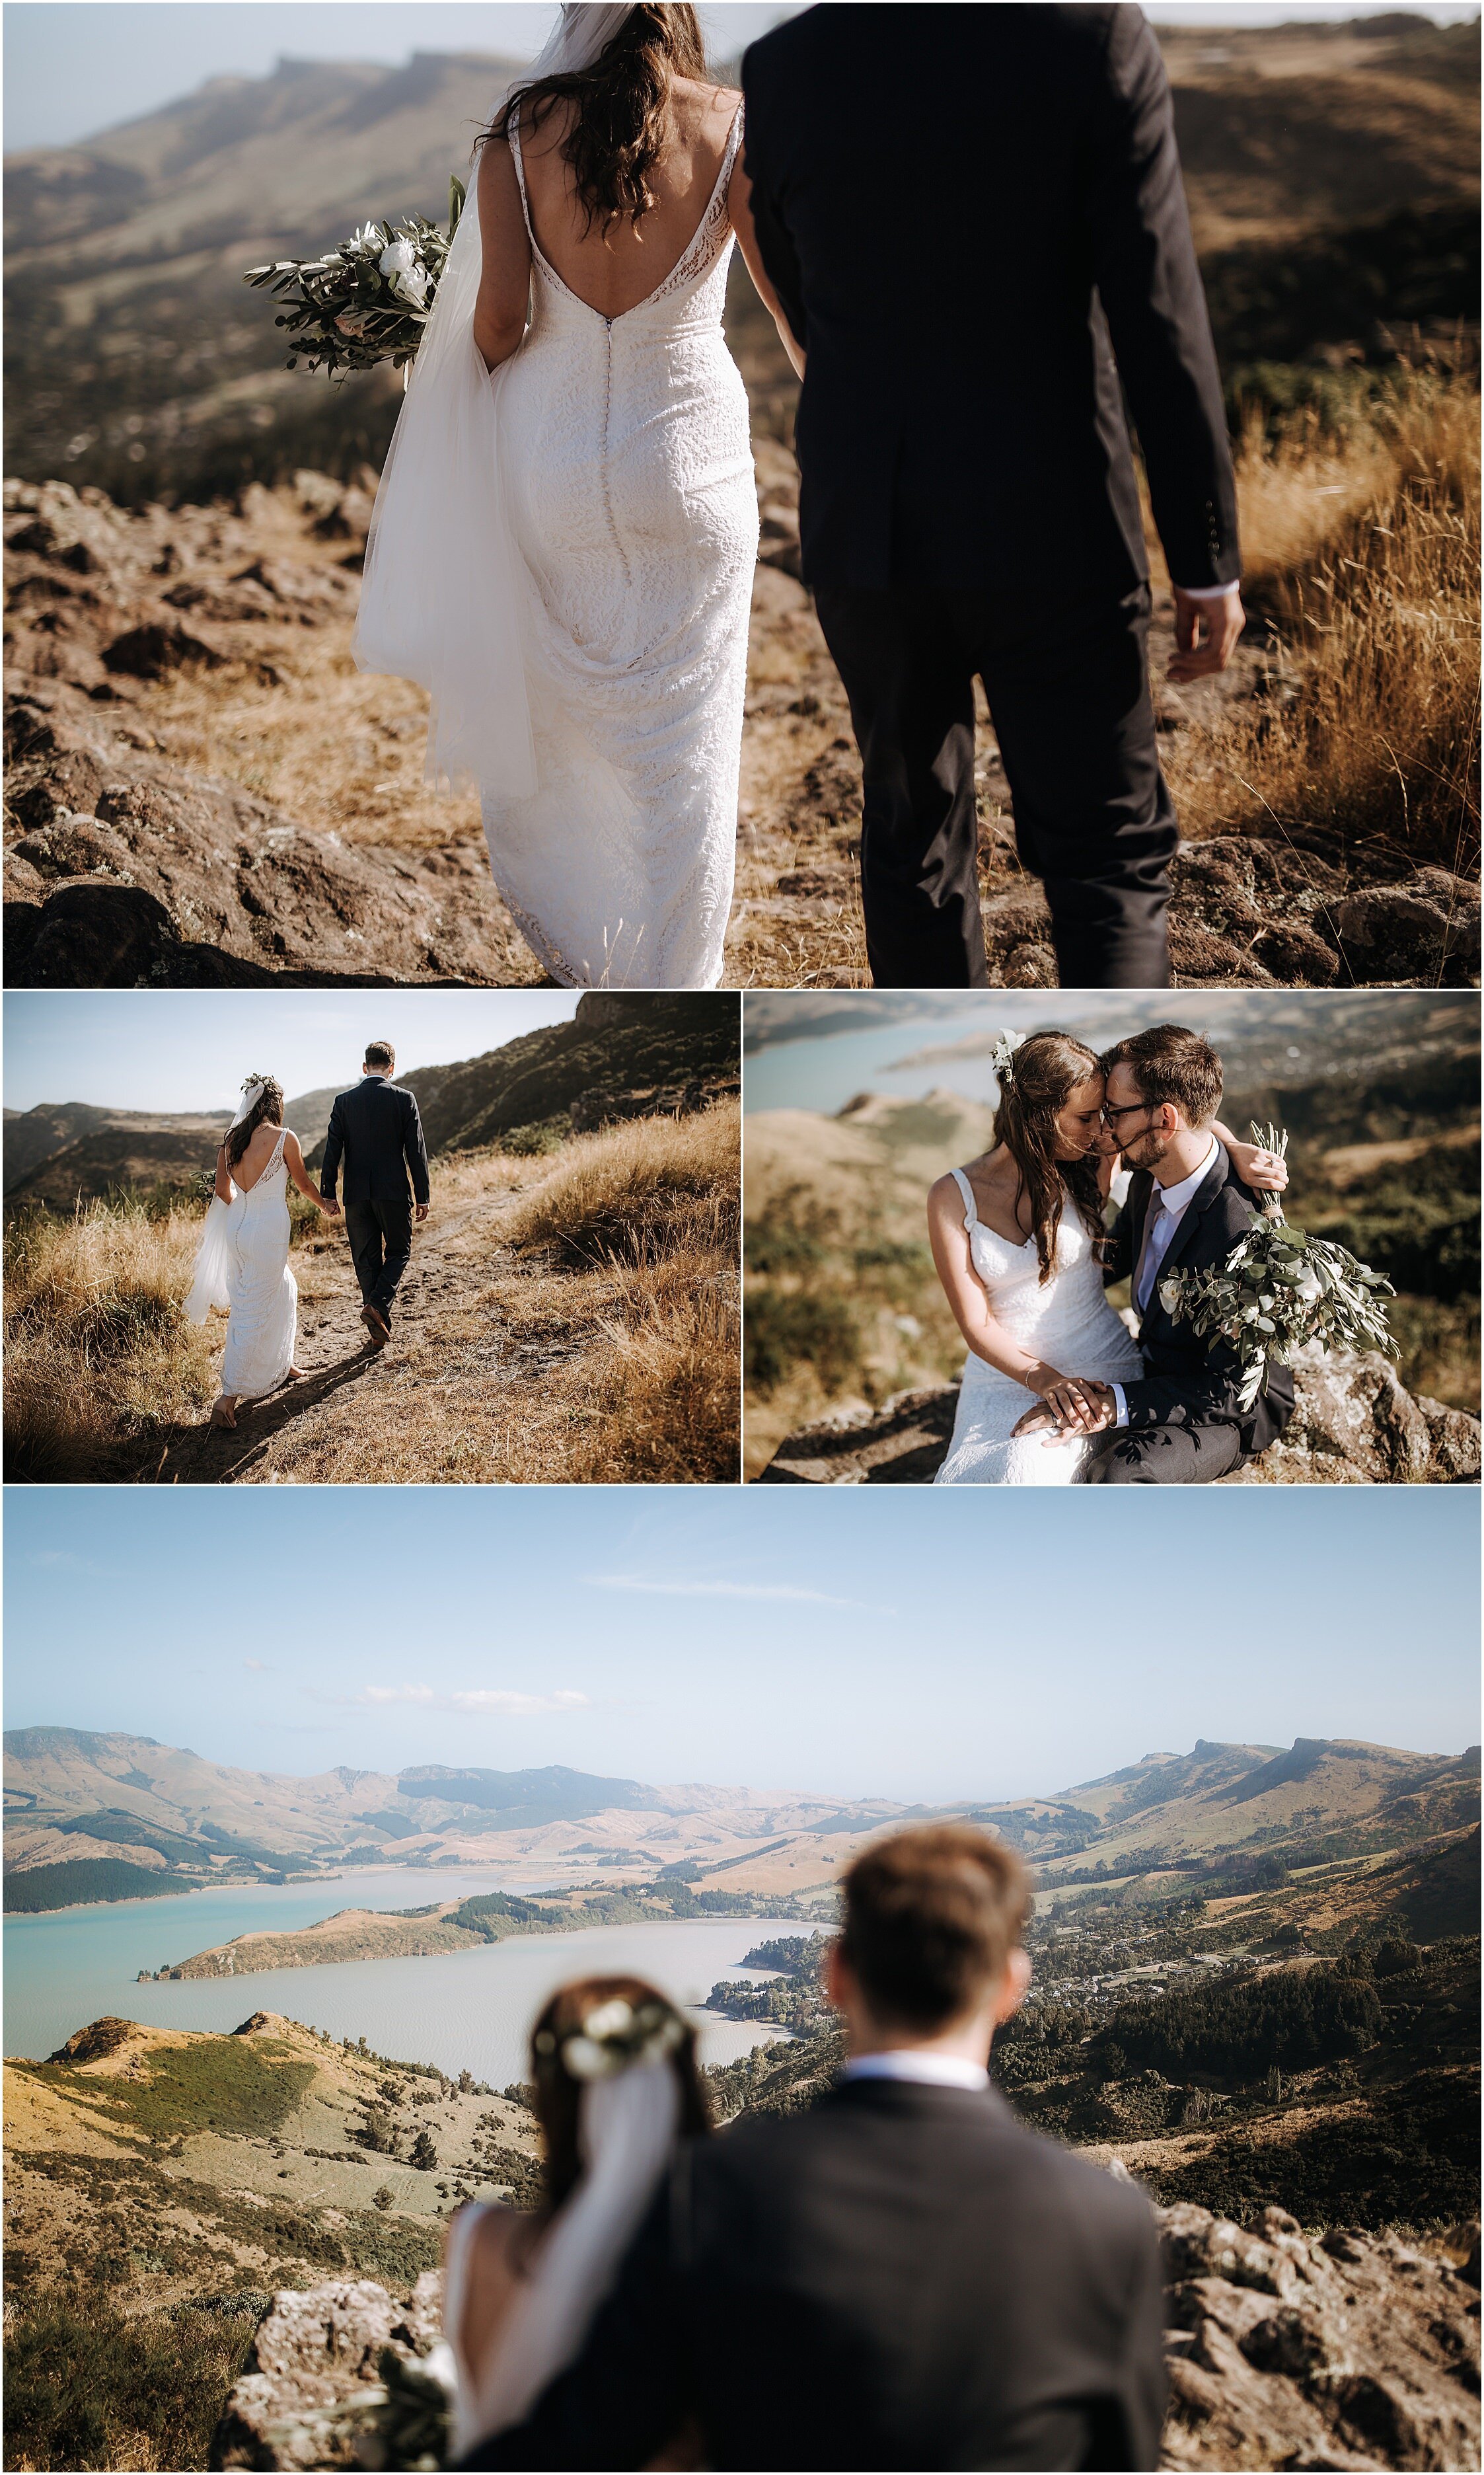 Zanda+Auckland+wedding+photographer+retro+car+Port+Hills+fairytale+garden+venue+Christchurch+South+Island+New+Zealand_38.jpeg